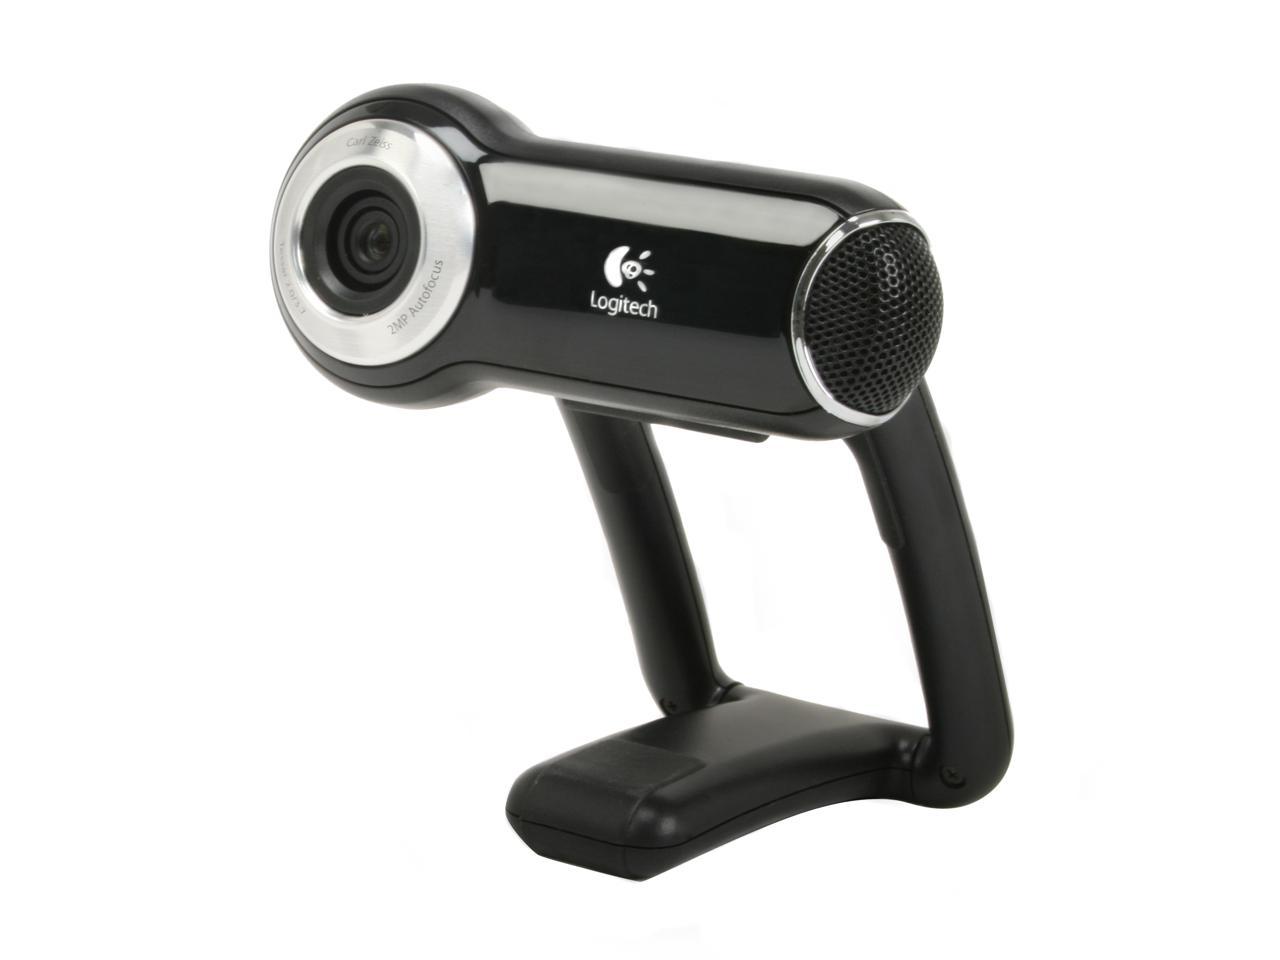 Logitech Pro 9000 PC Internet Camera Webcam with 2.0-Megapixel Video Resolution and Carl Zeiss Lens Optics Renewed